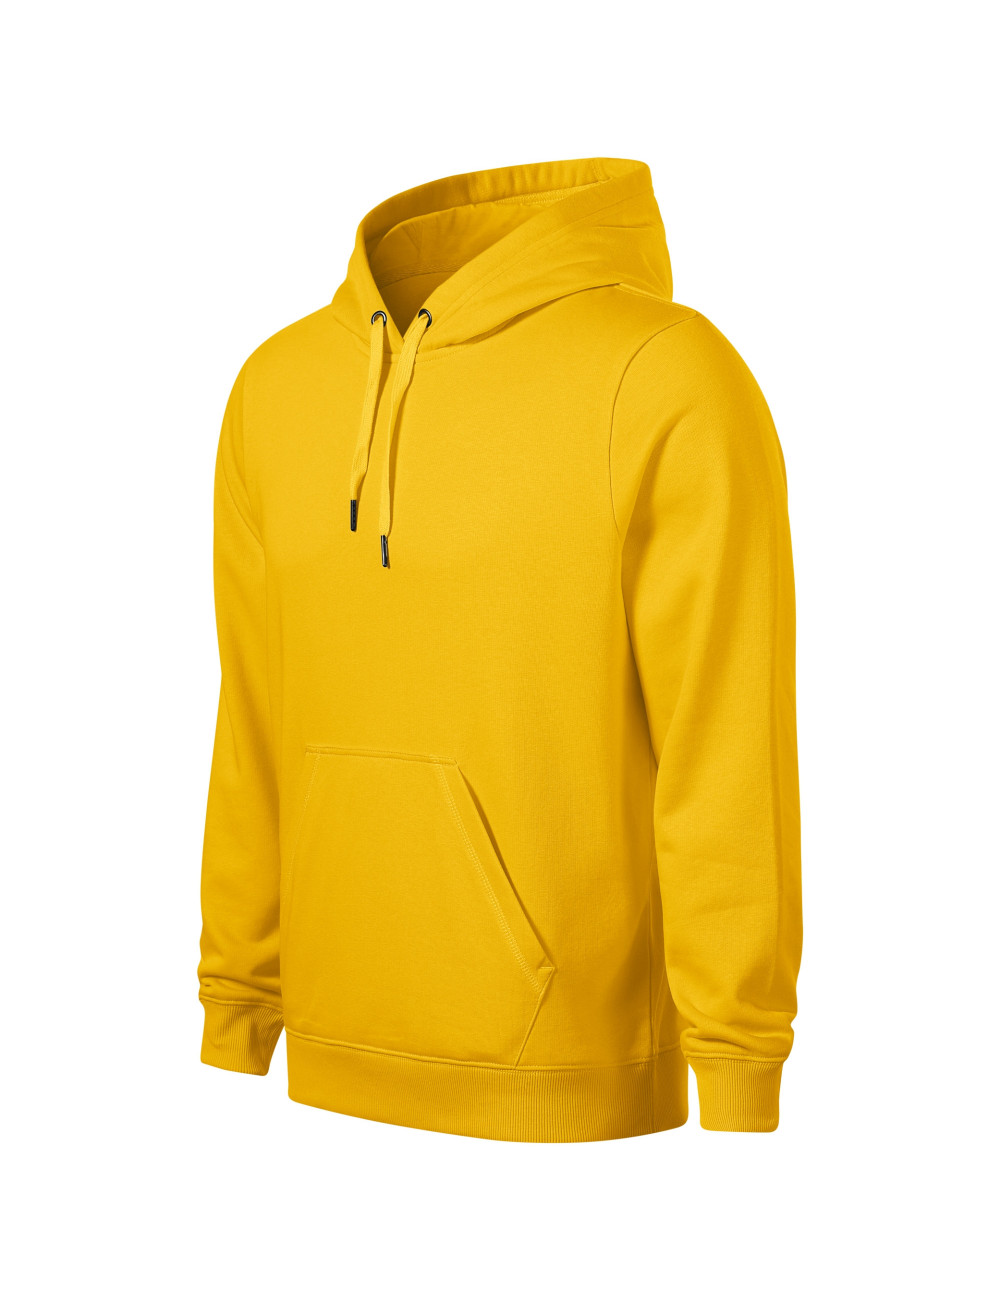 Men`s break sweatshirt (grs) 840 yellow Adler Malfini®